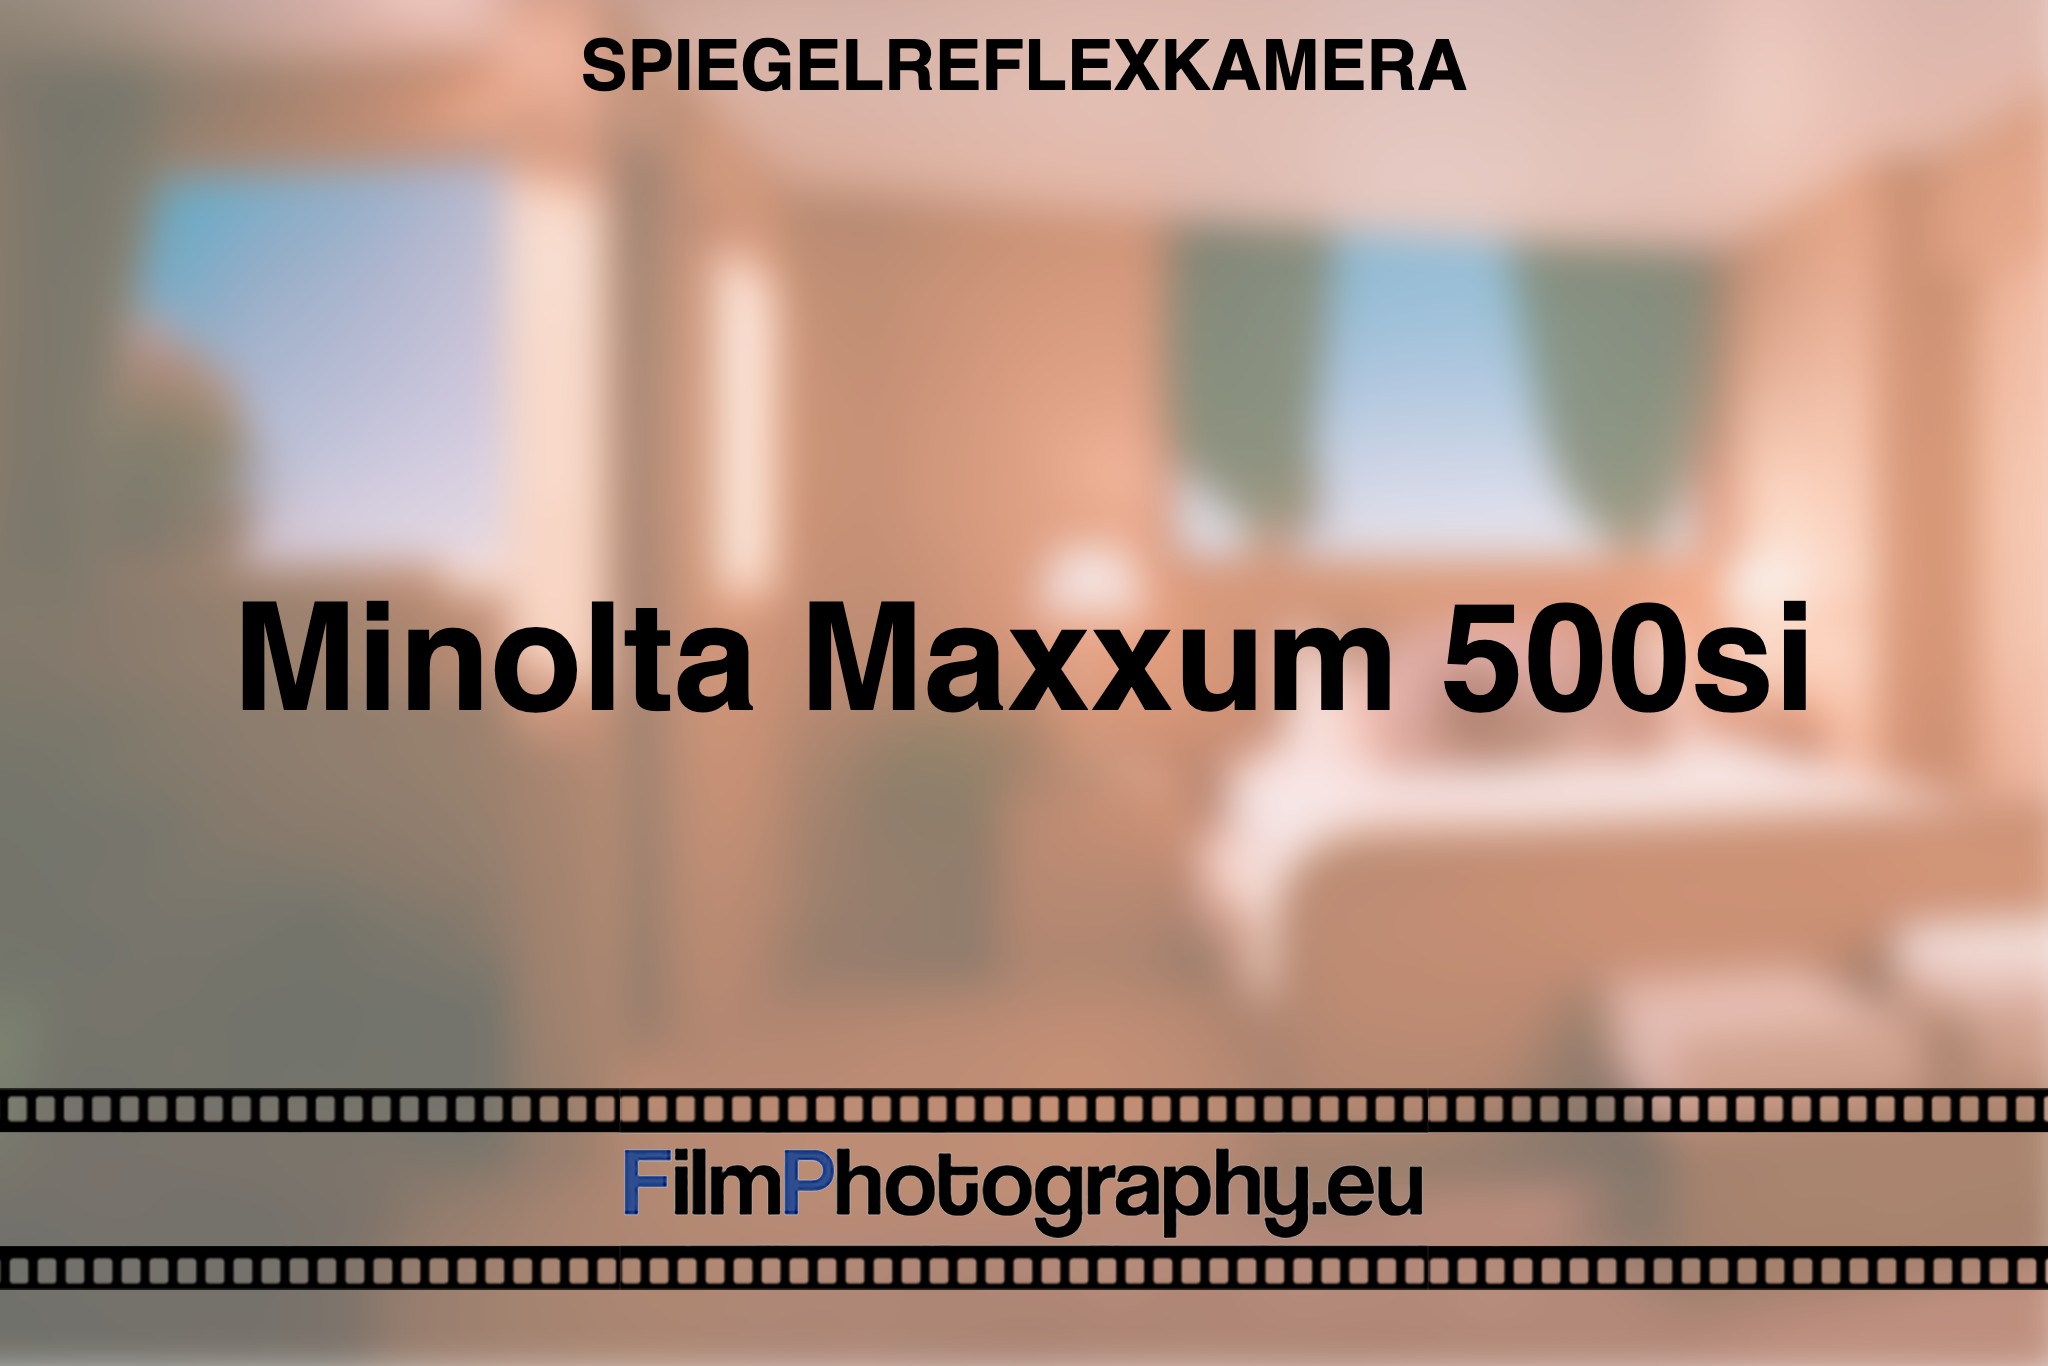 minolta-maxxum-500si-spiegelreflexkamera-bnv